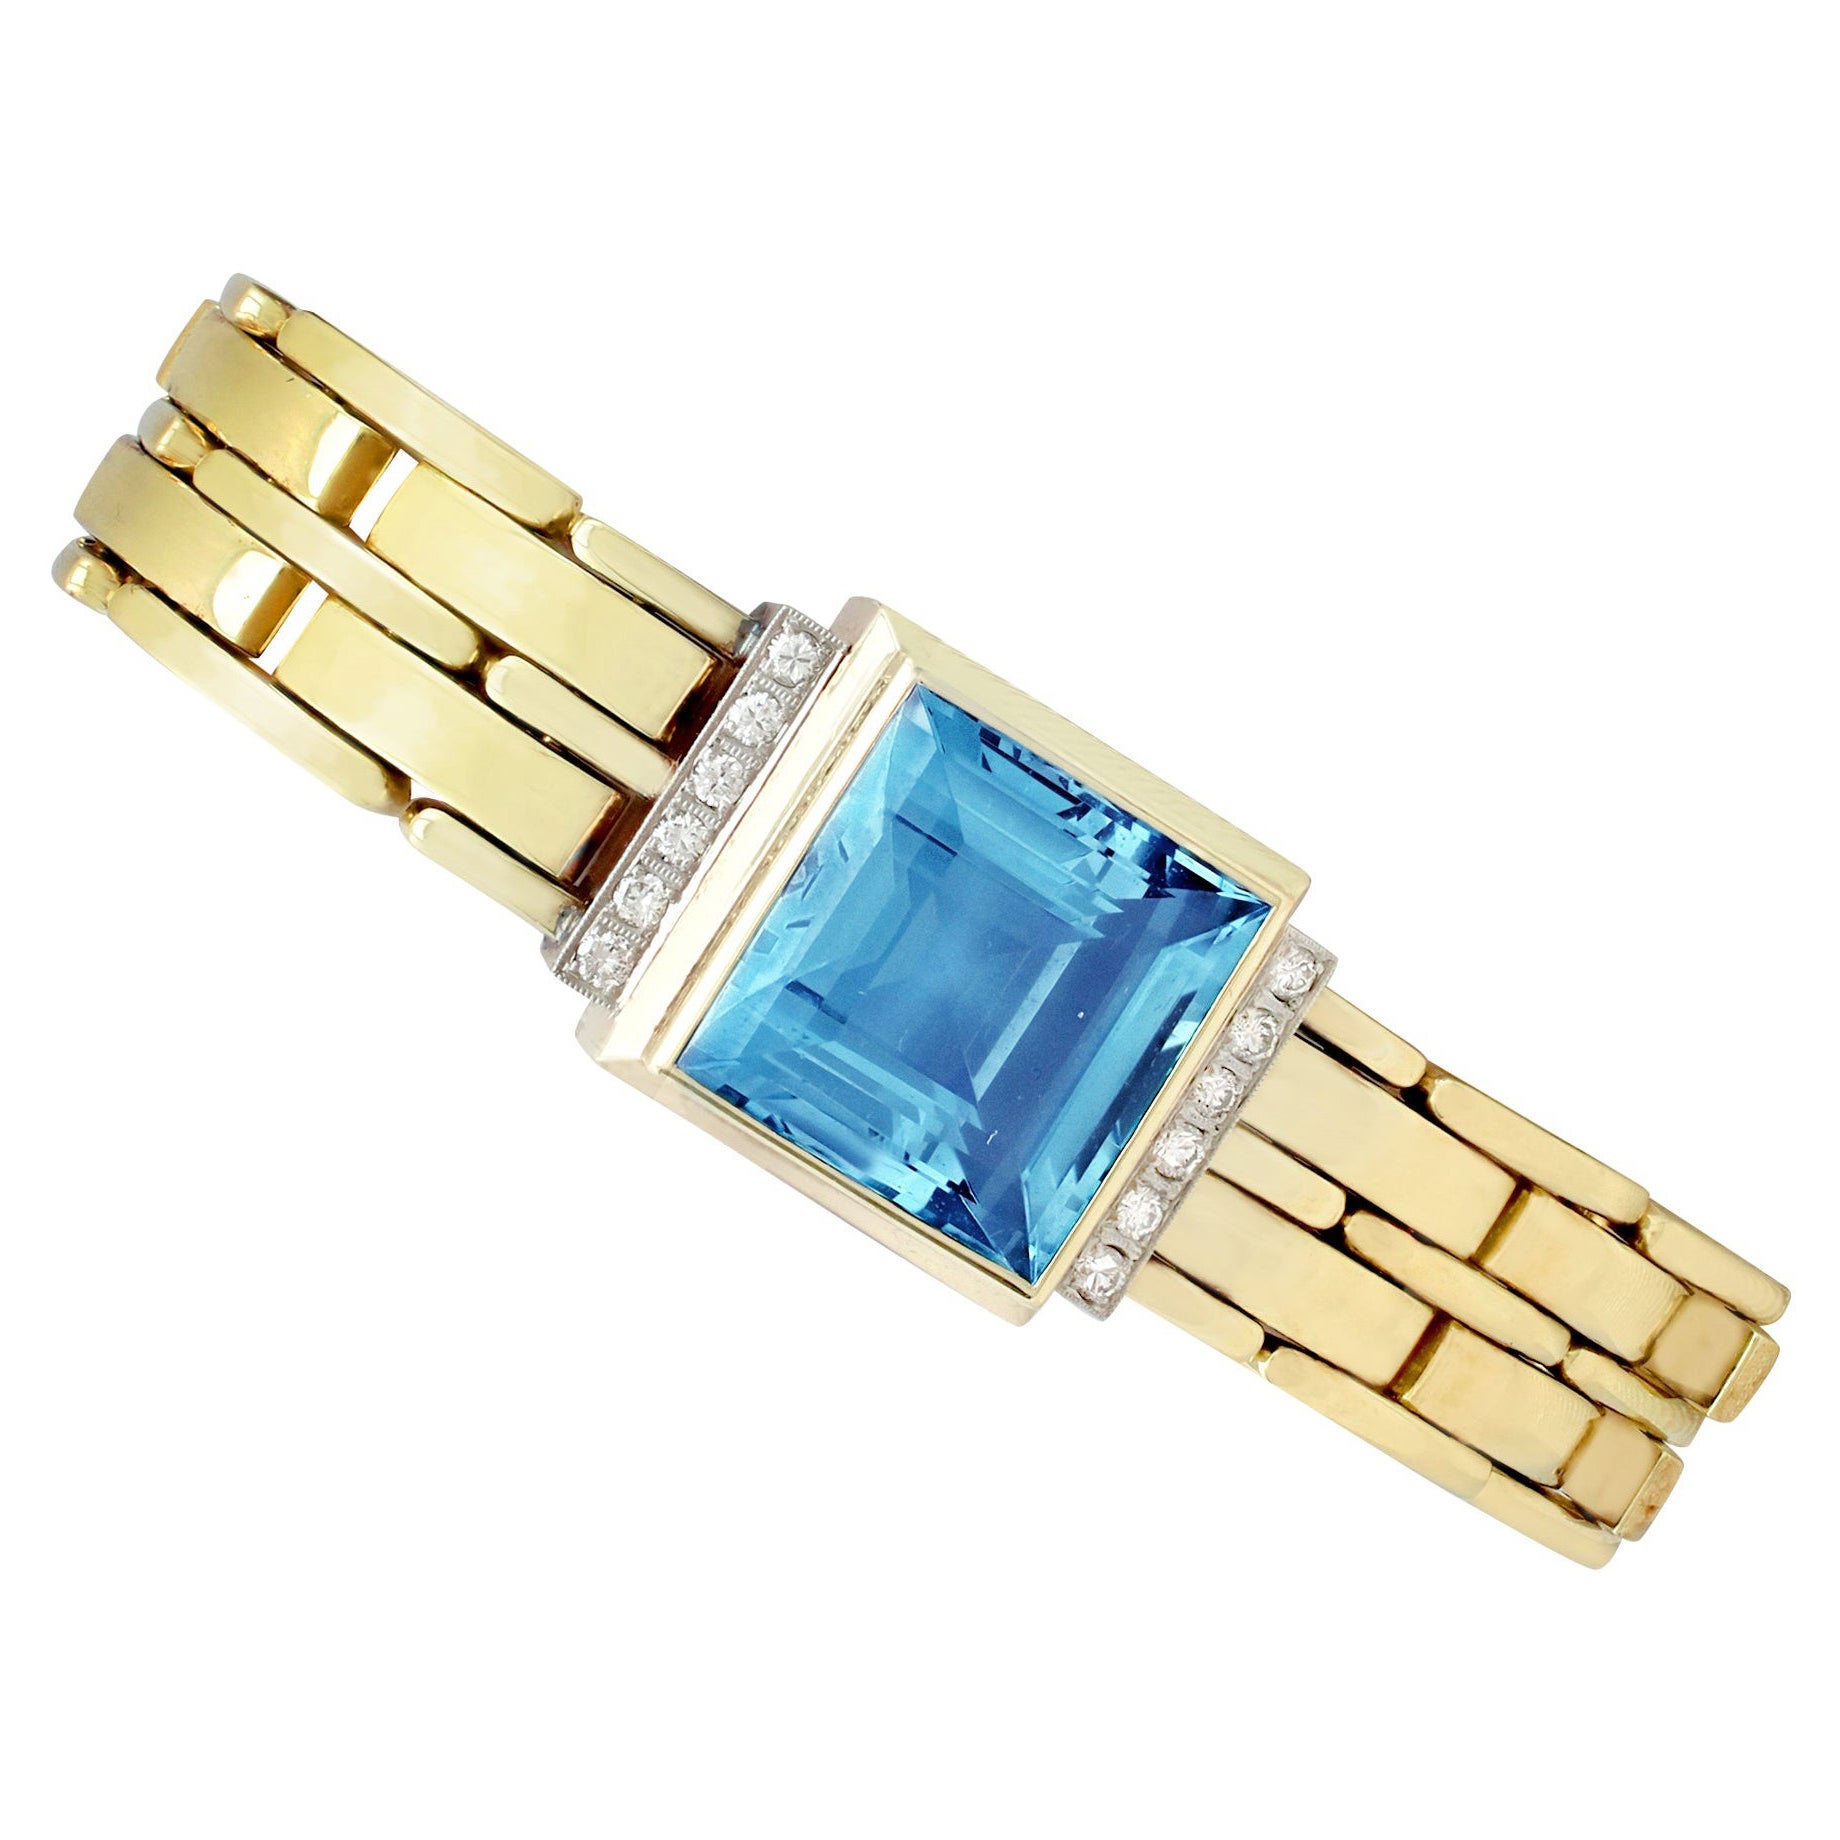 1960s Art Deco Style 21.68 Carat Aquamarine and Diamond Yellow Gold Bracelet For Sale